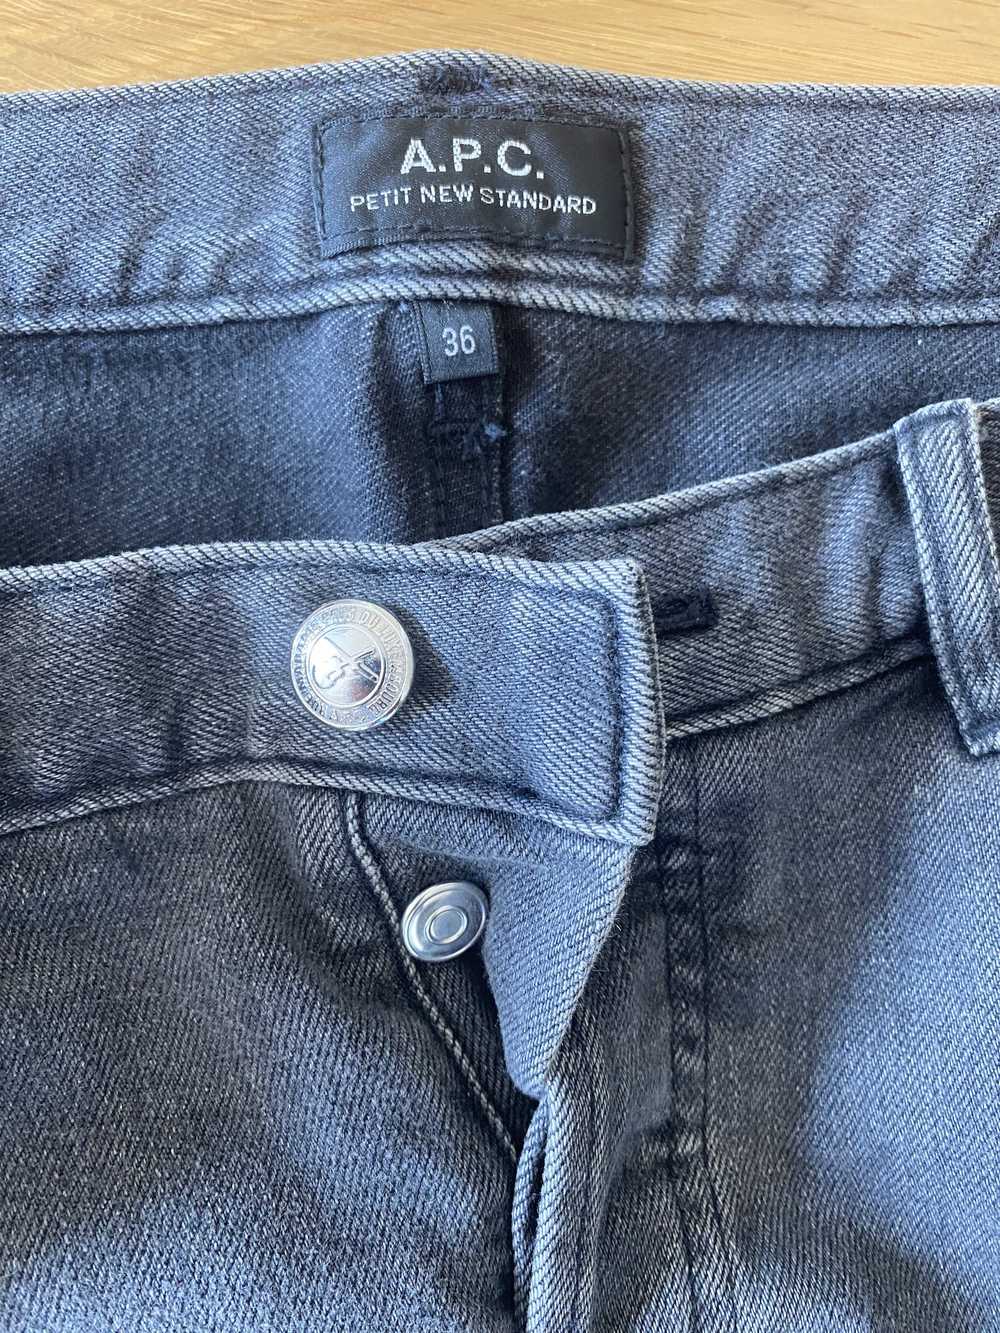 A.P.C. Petite New Standard Jeans - image 4